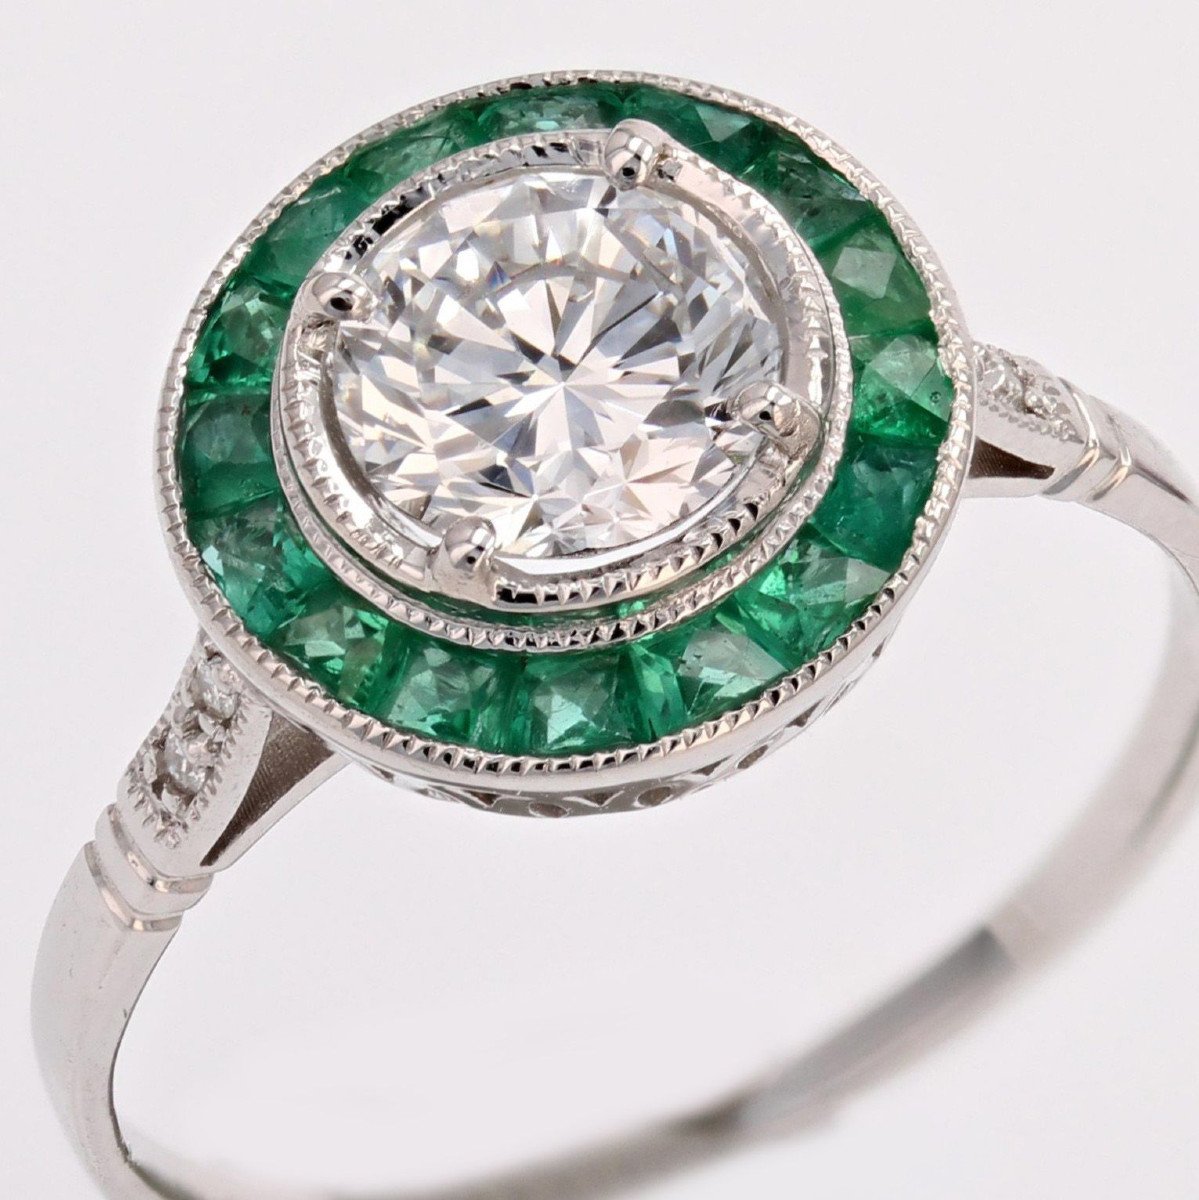 Calibrated Diamonds And Emeralds Ring-photo-5